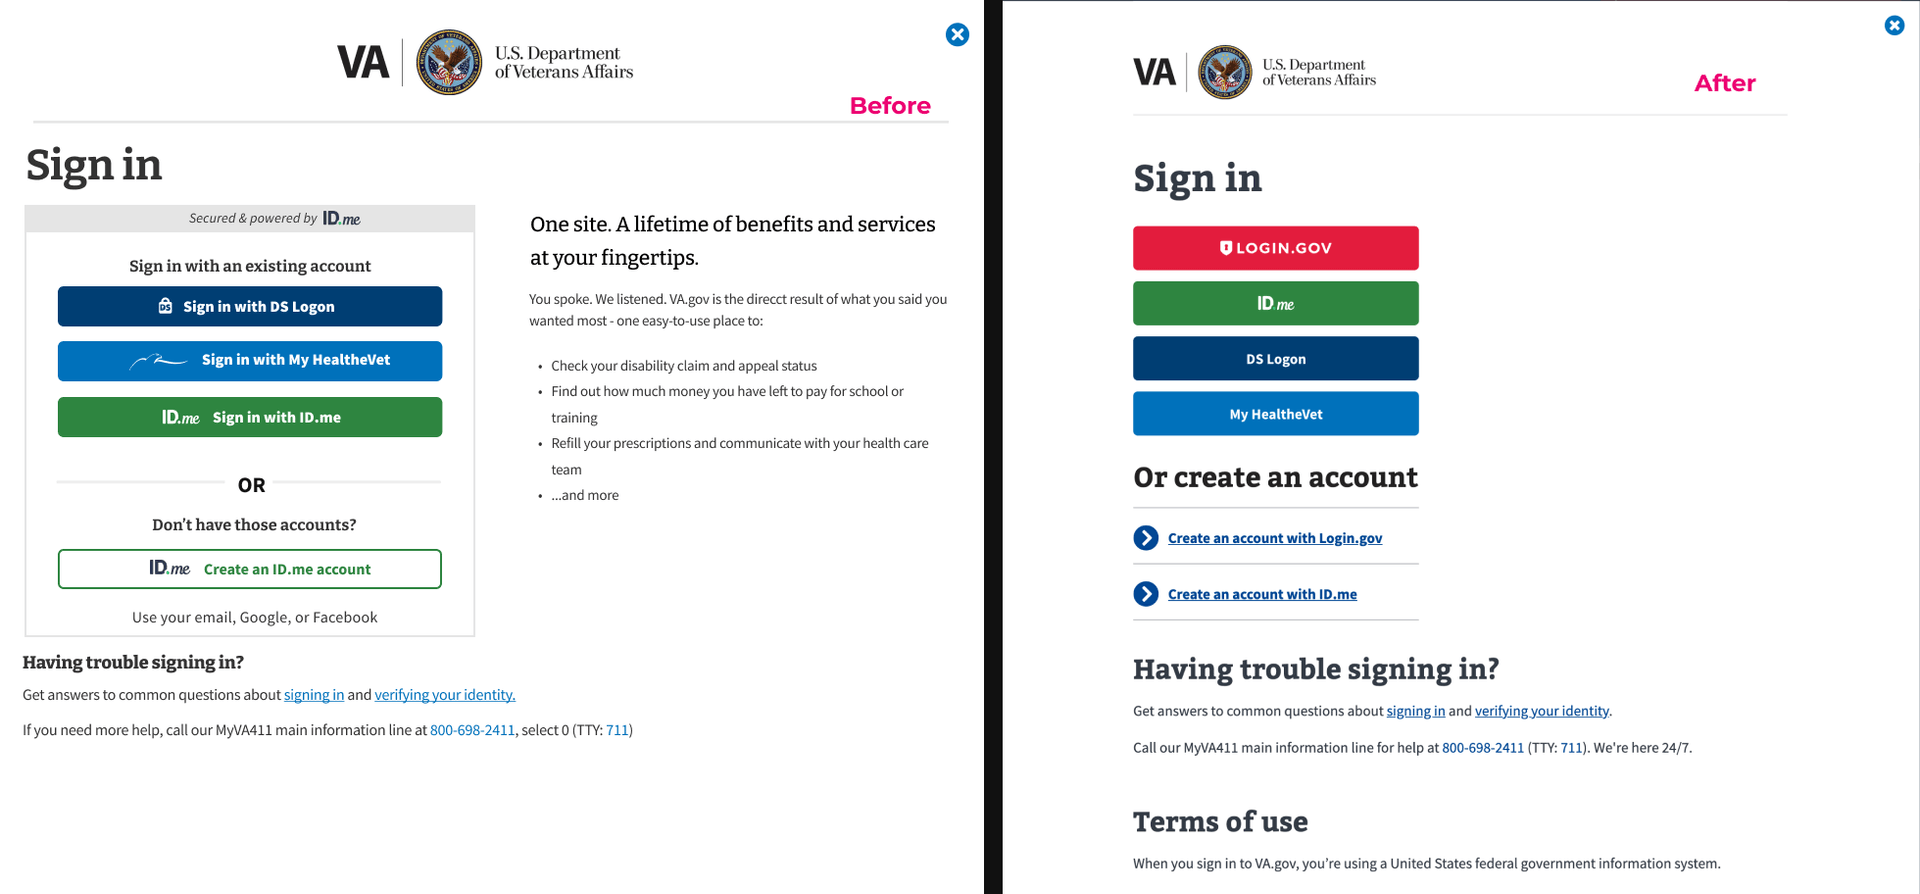 VA.gov Sign in Modal (before & after) - 